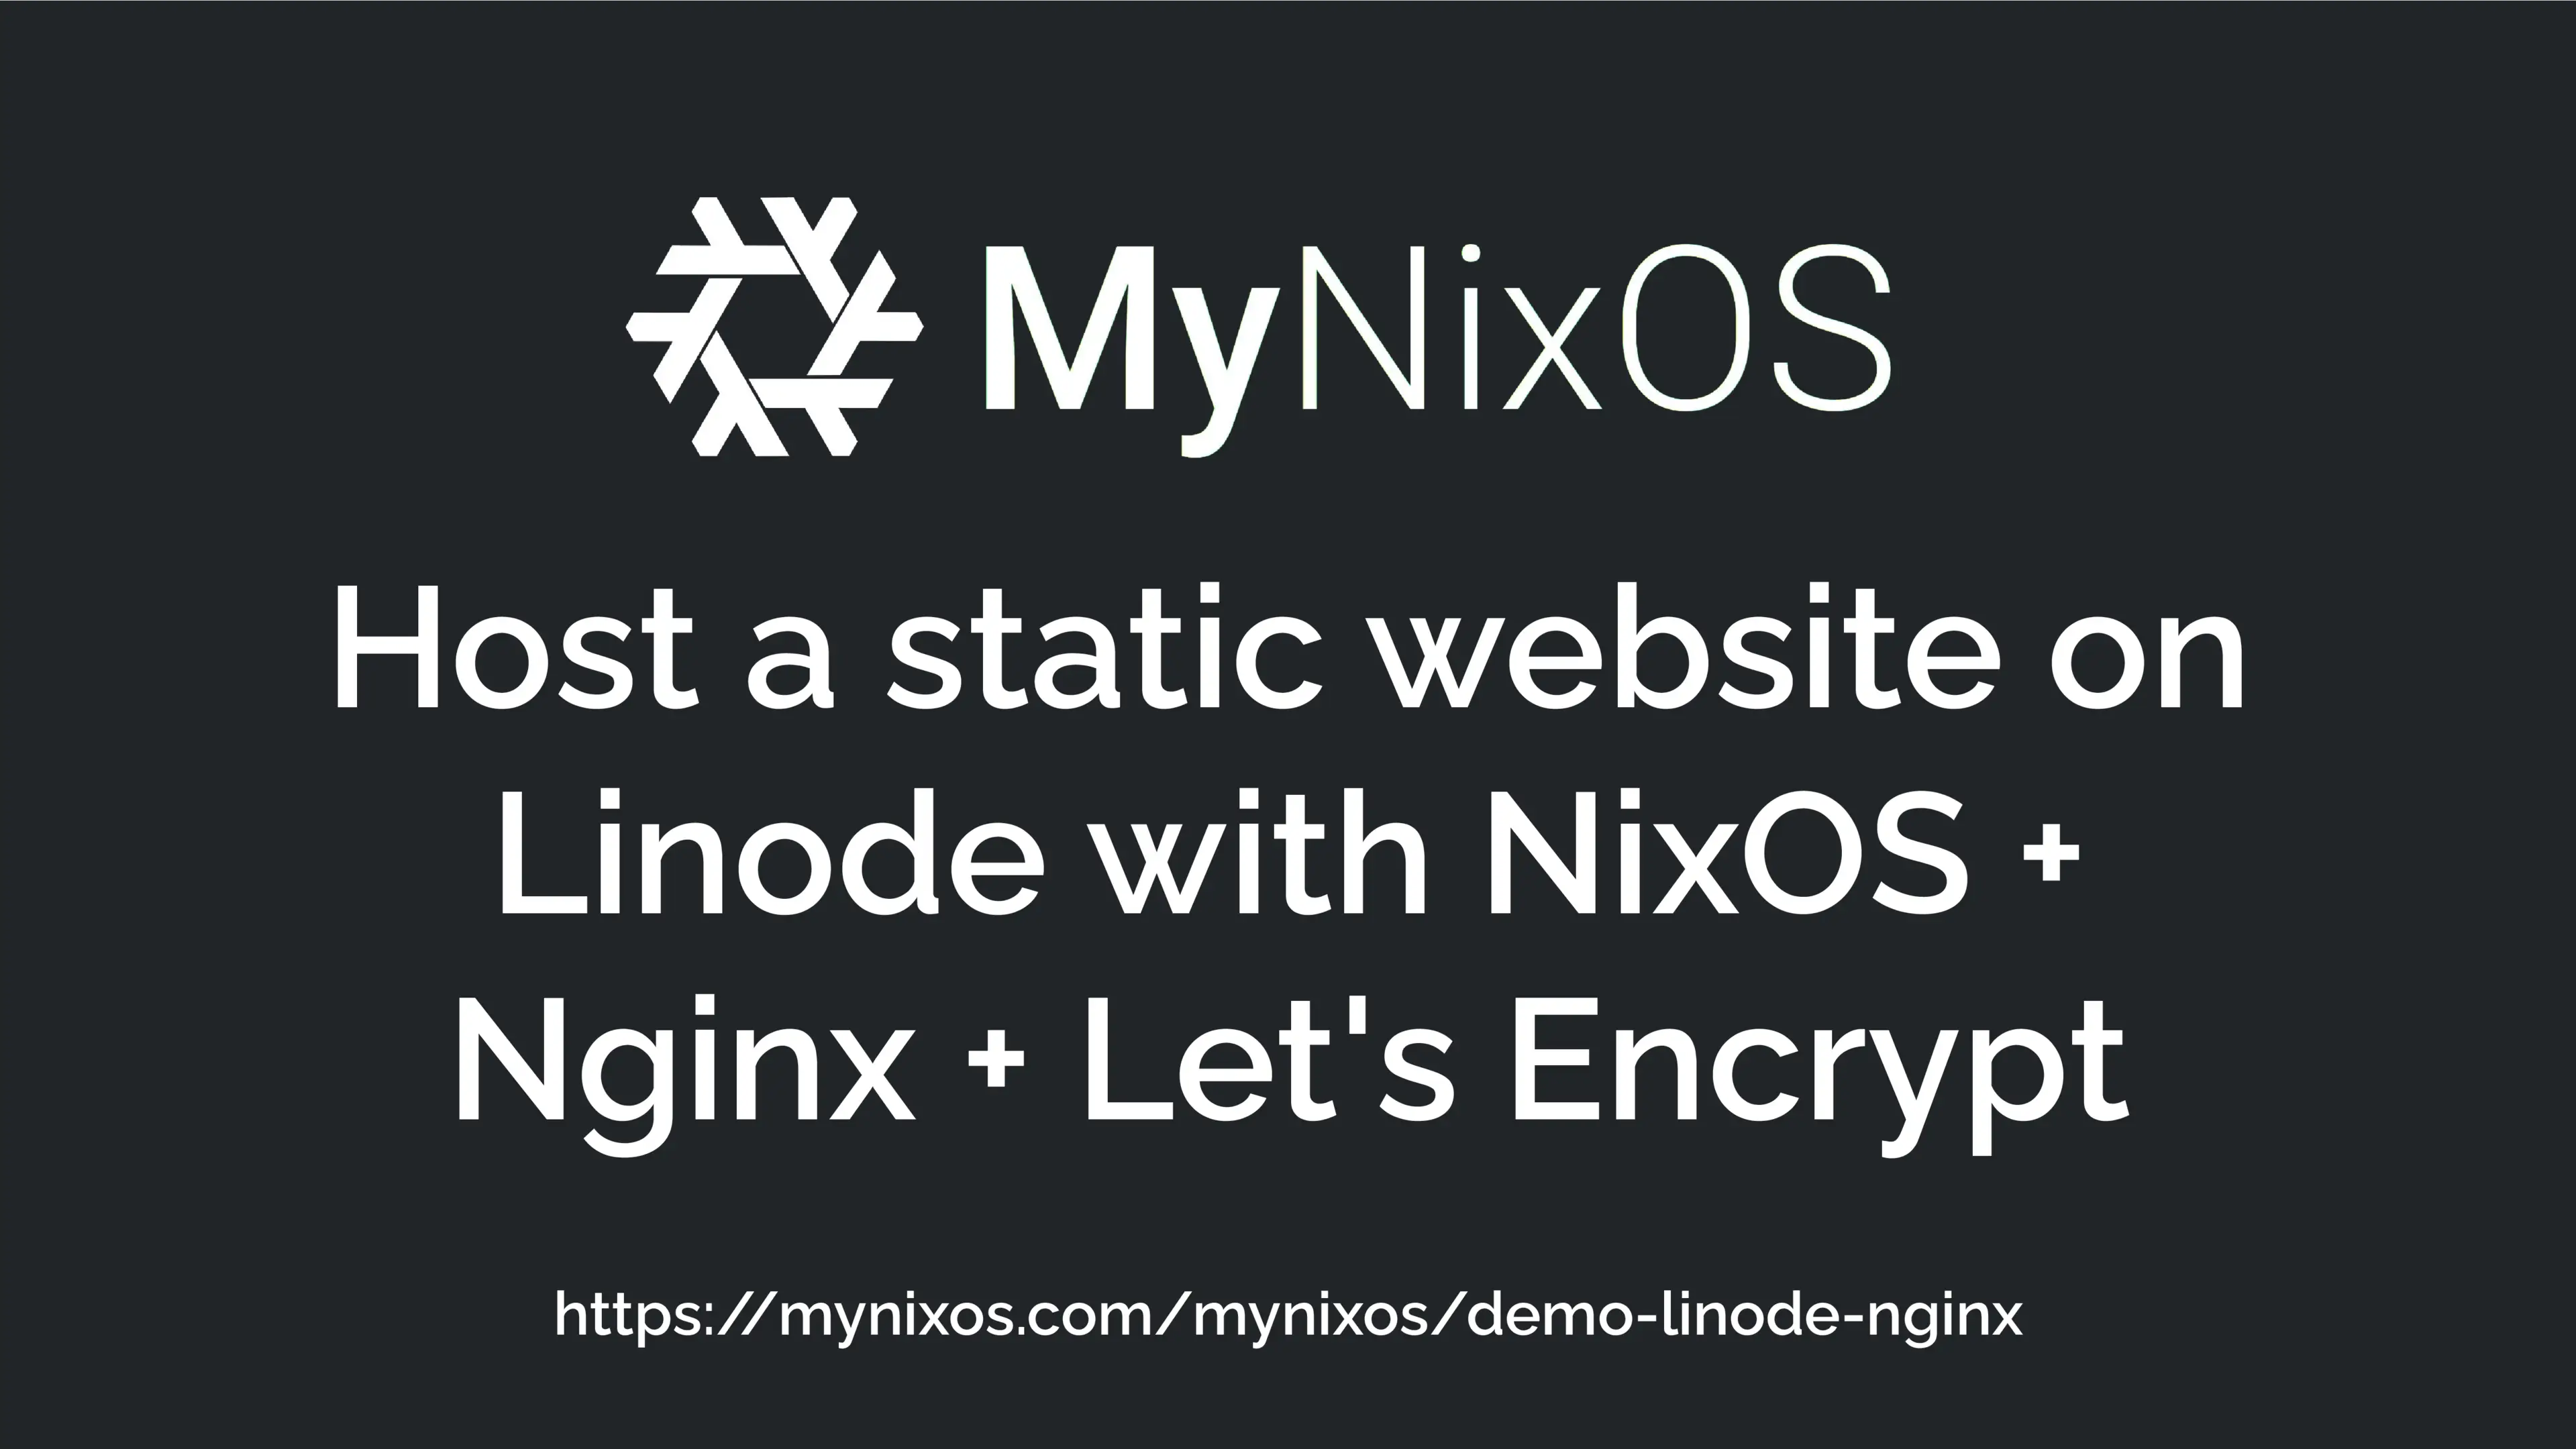 https://mynixos.com/screenshots/mnos-demo-linode-nginx.webp